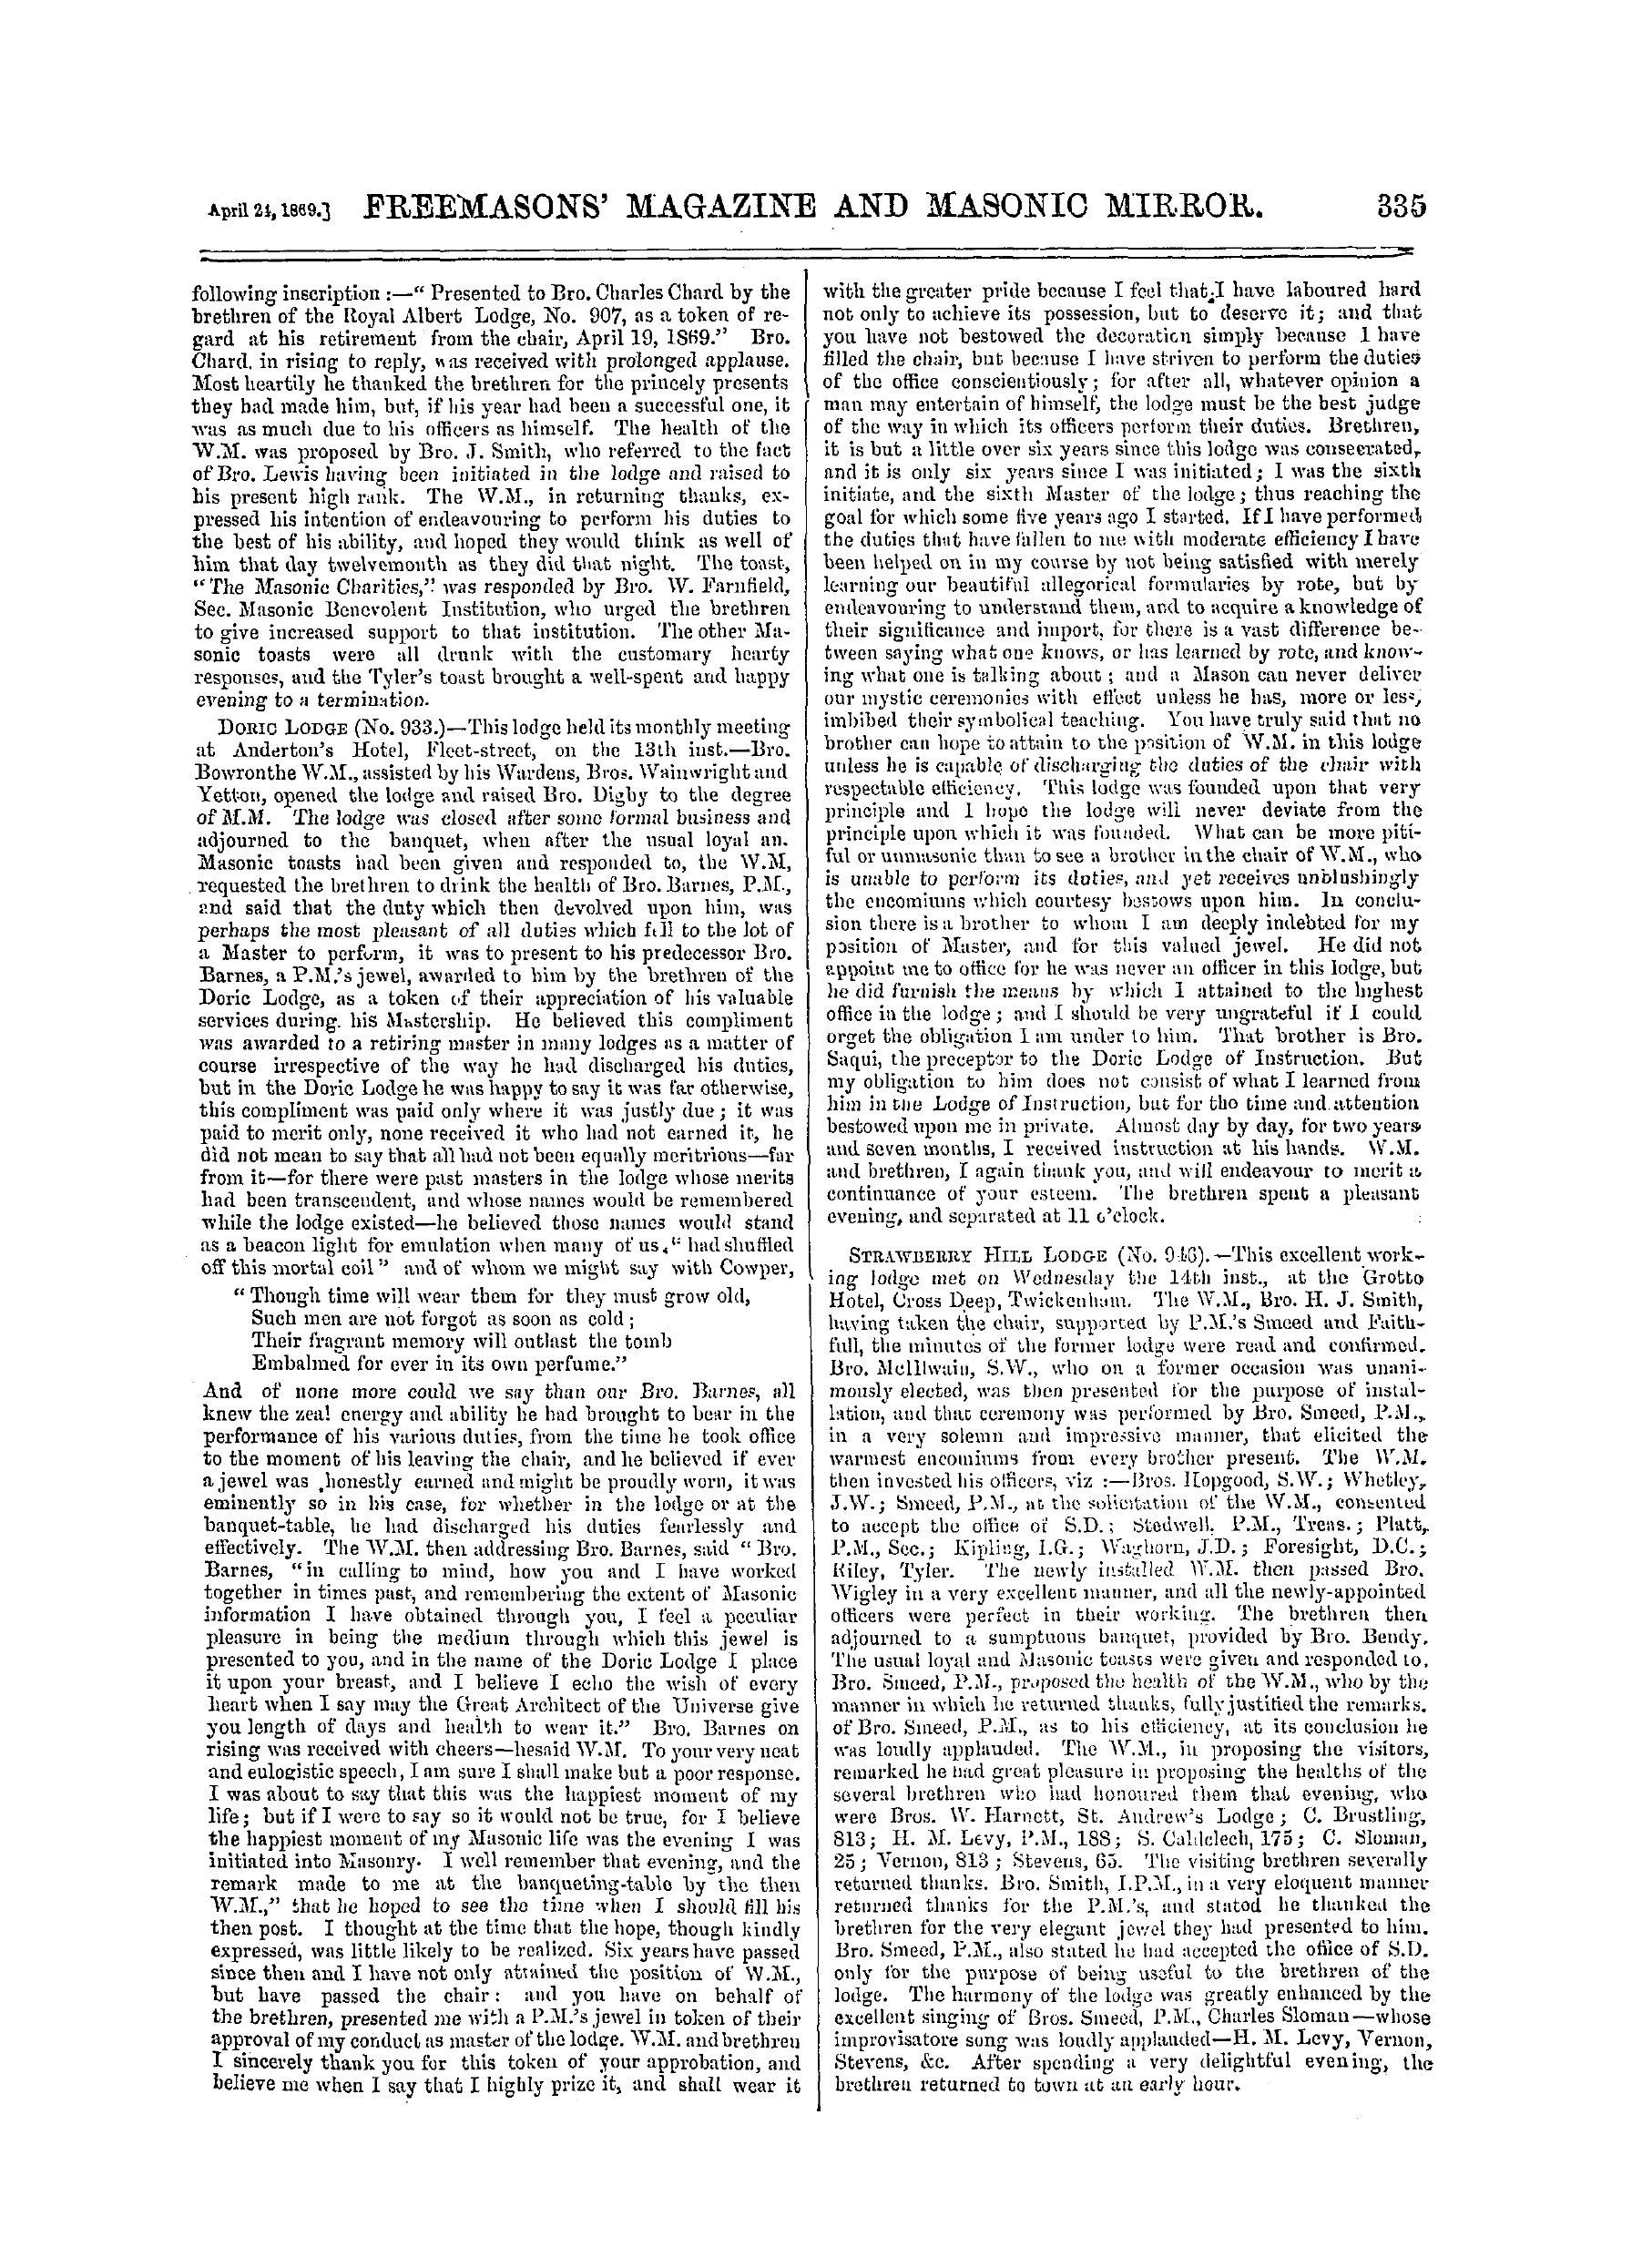 The Freemasons' Monthly Magazine: 1869-04-24 - Metropolitan.